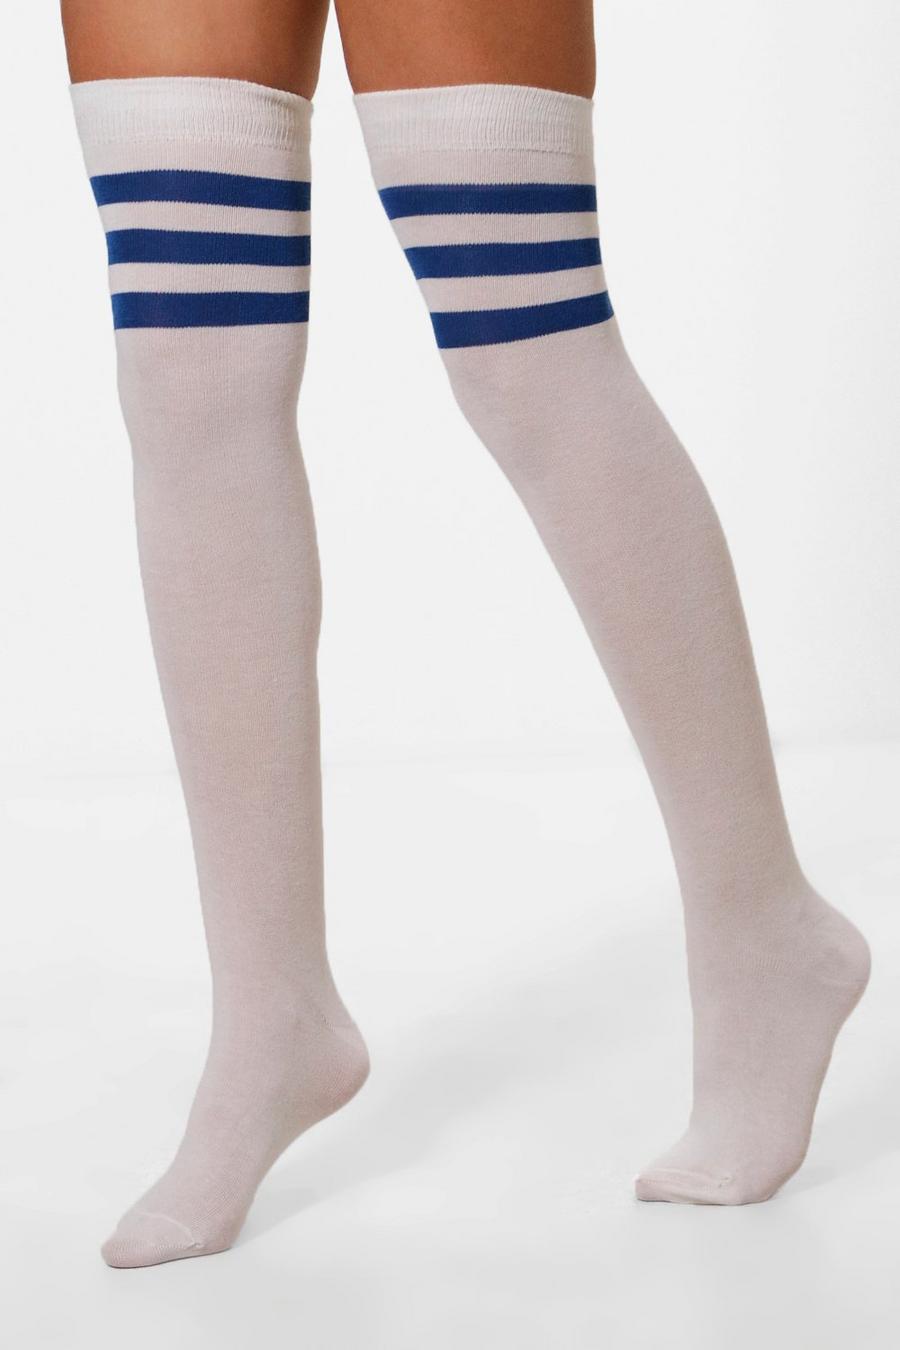 Blue Stripe Top Knee High Socks image number 1